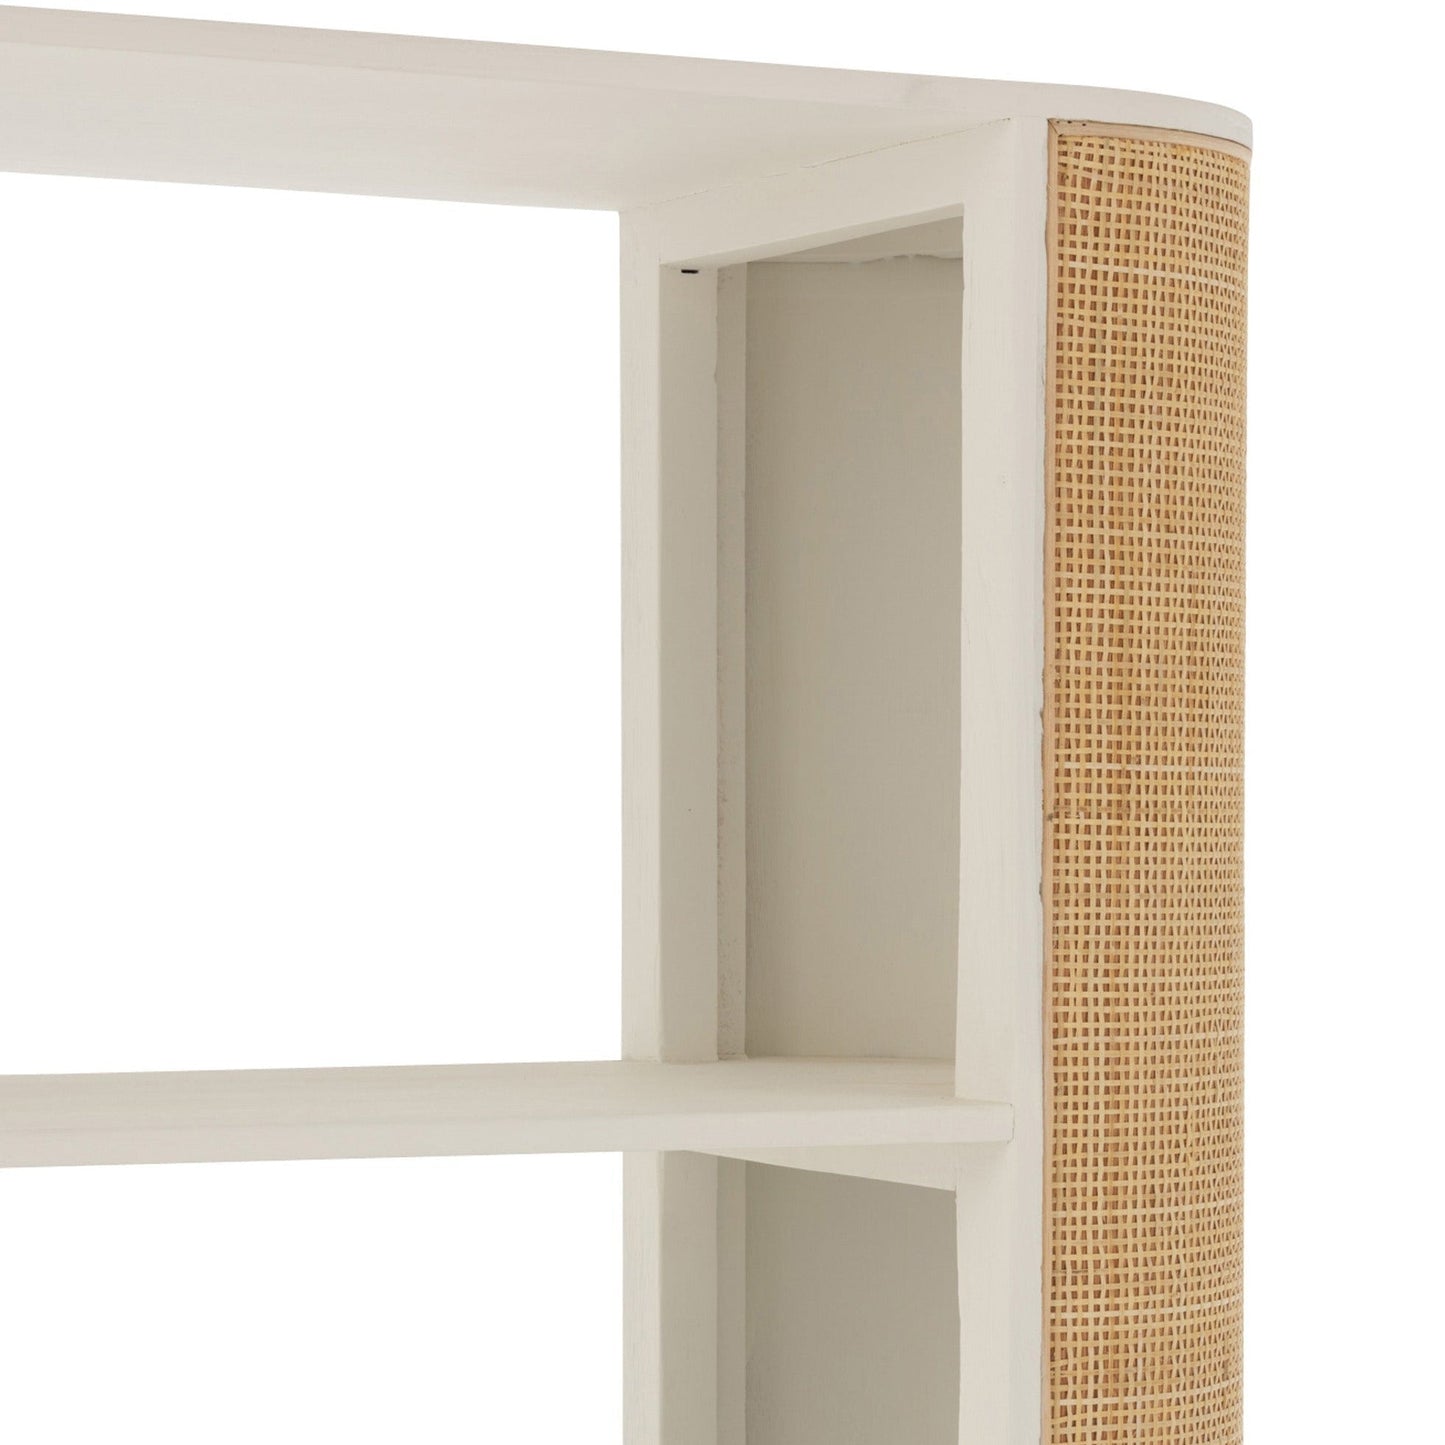 Wood Cabinet W/Shelves